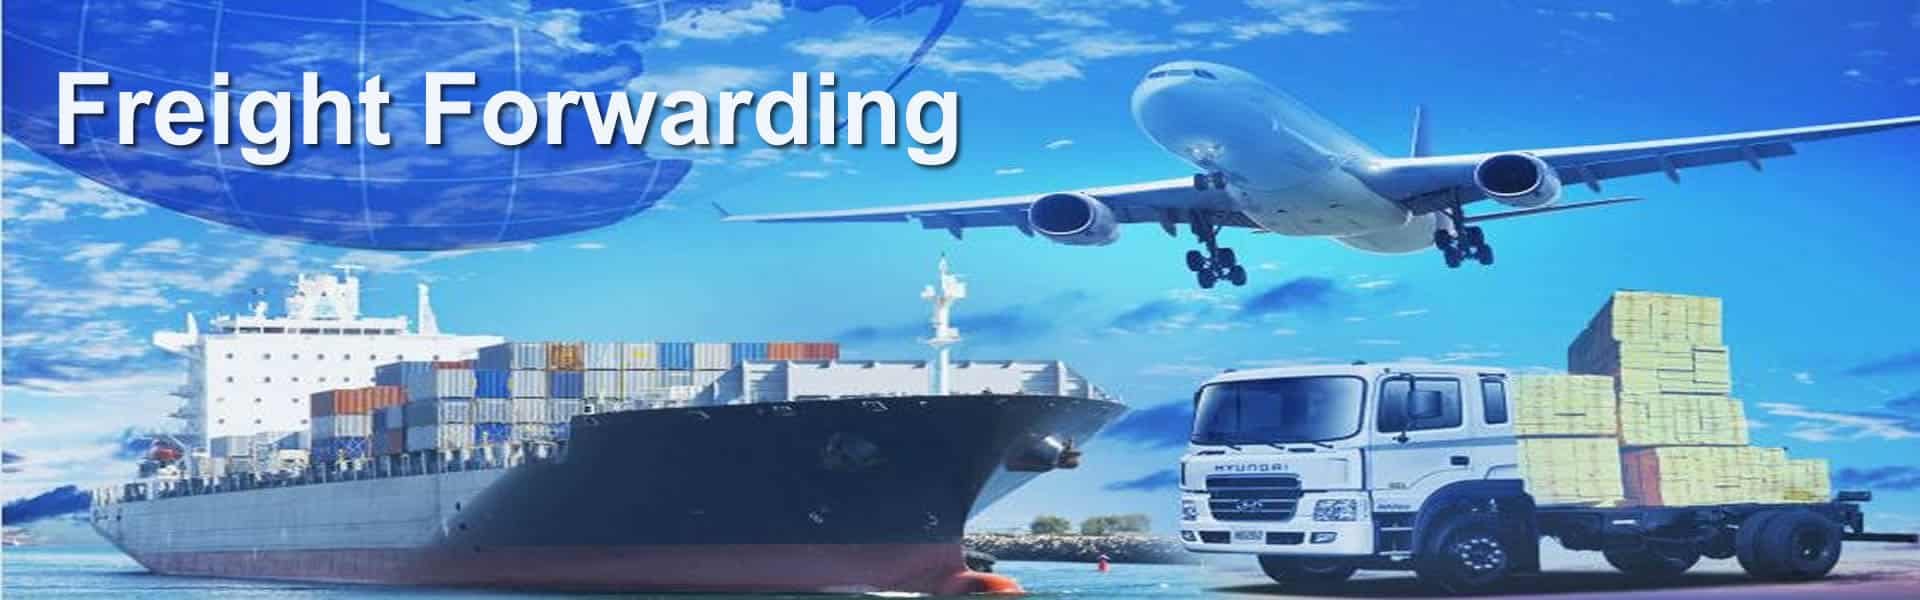 Freight Forwarding services by Zetman ESL